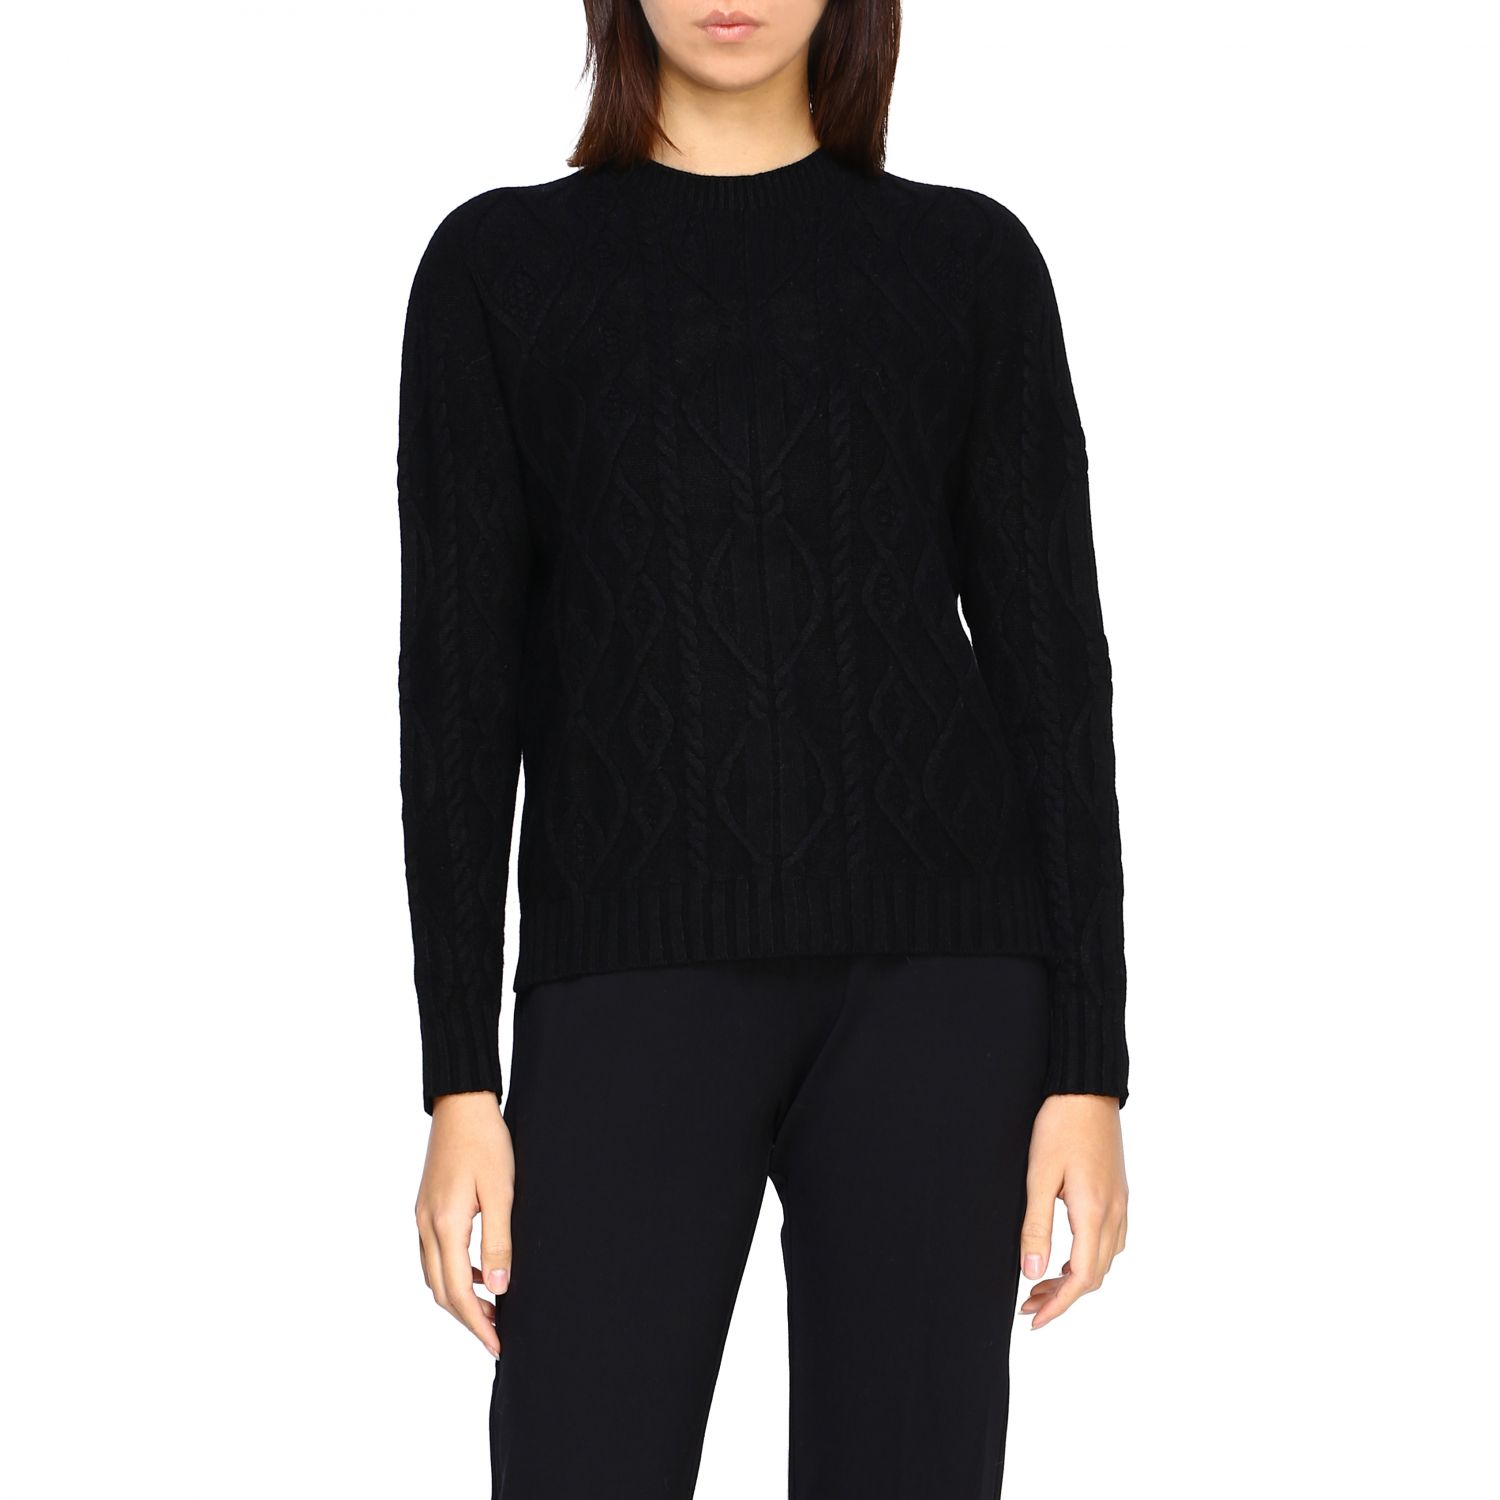 KAOS Pullover DAMEN Pullovers & Sweatshirts Pullover Pailletten Rabatt 90 % Schwarz S 